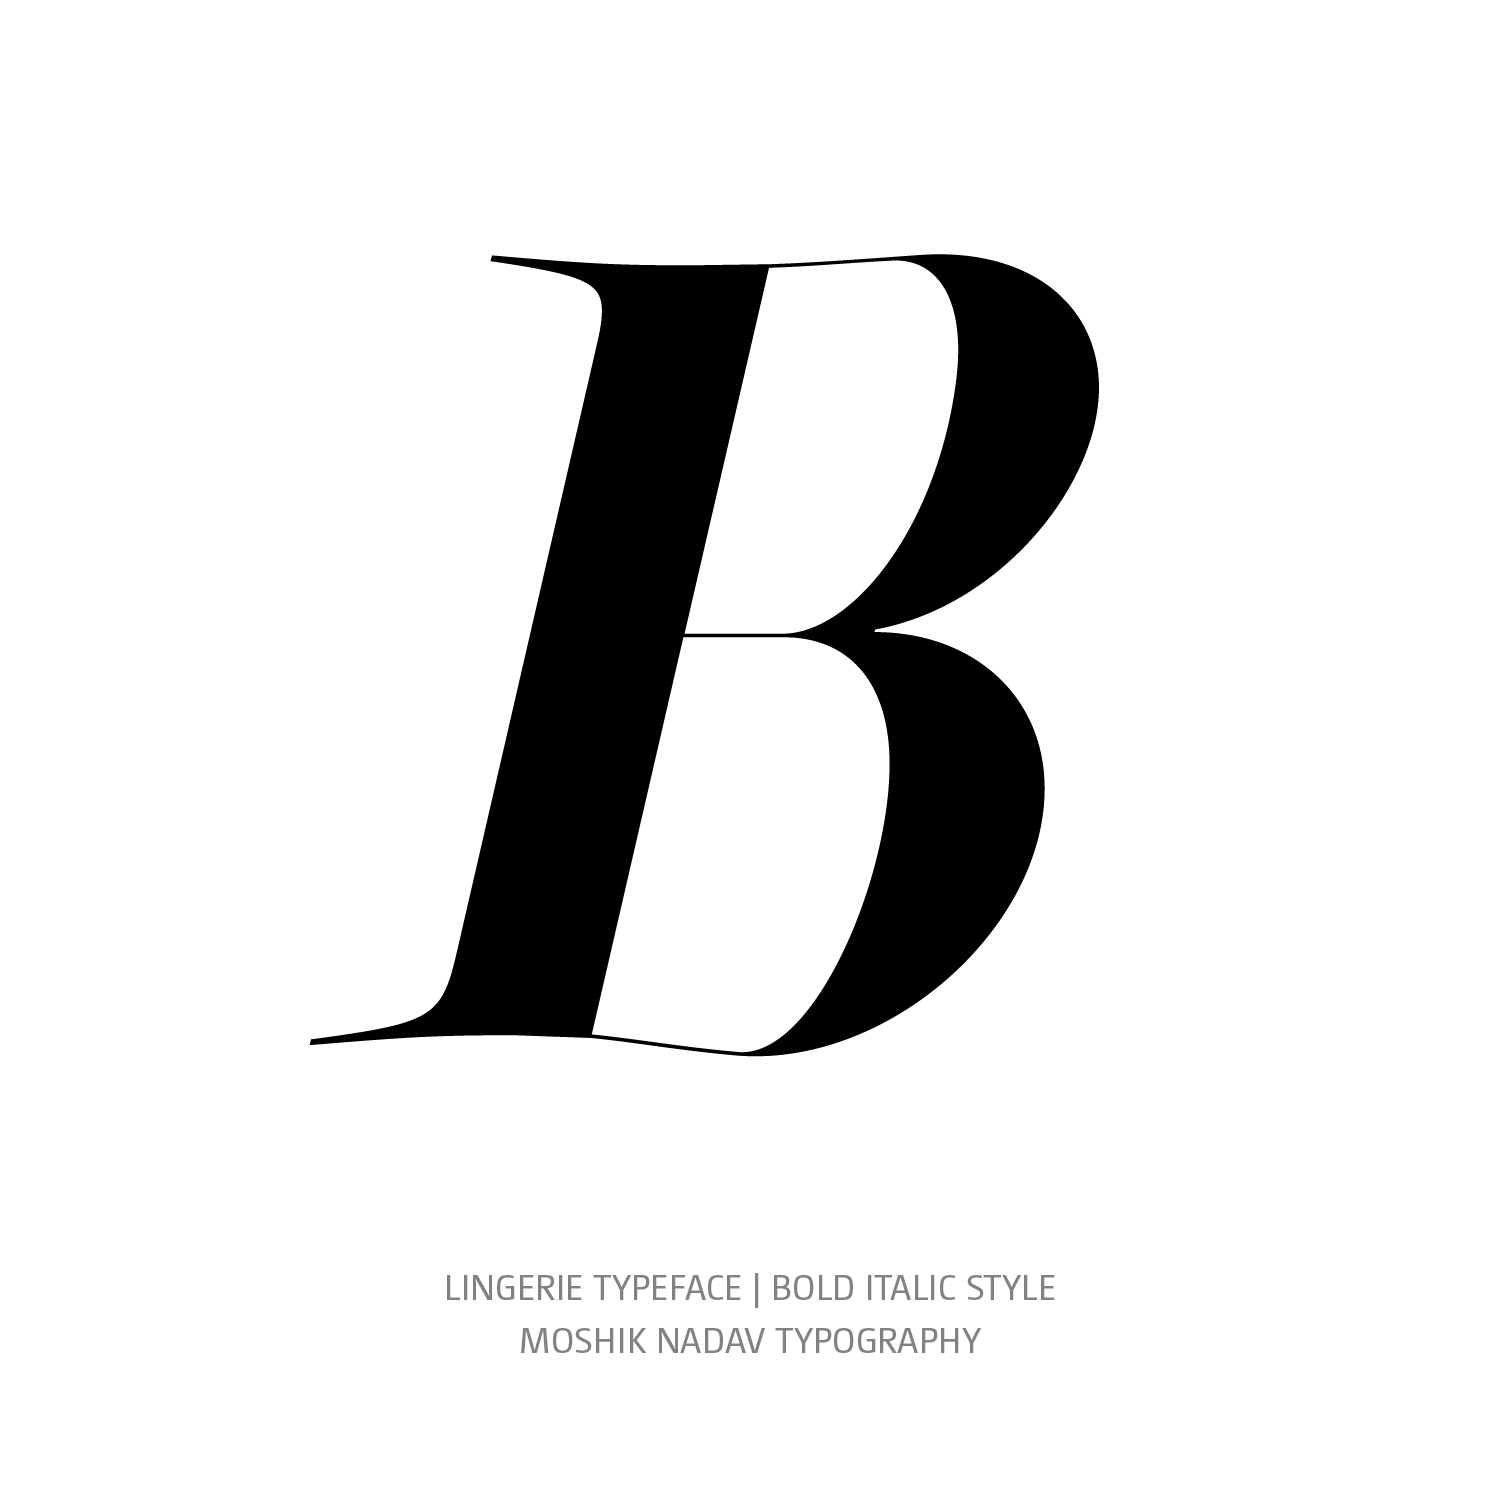 Lingerie Typeface Bold Italic B - Fashion fonts by Moshik Nadav Typography